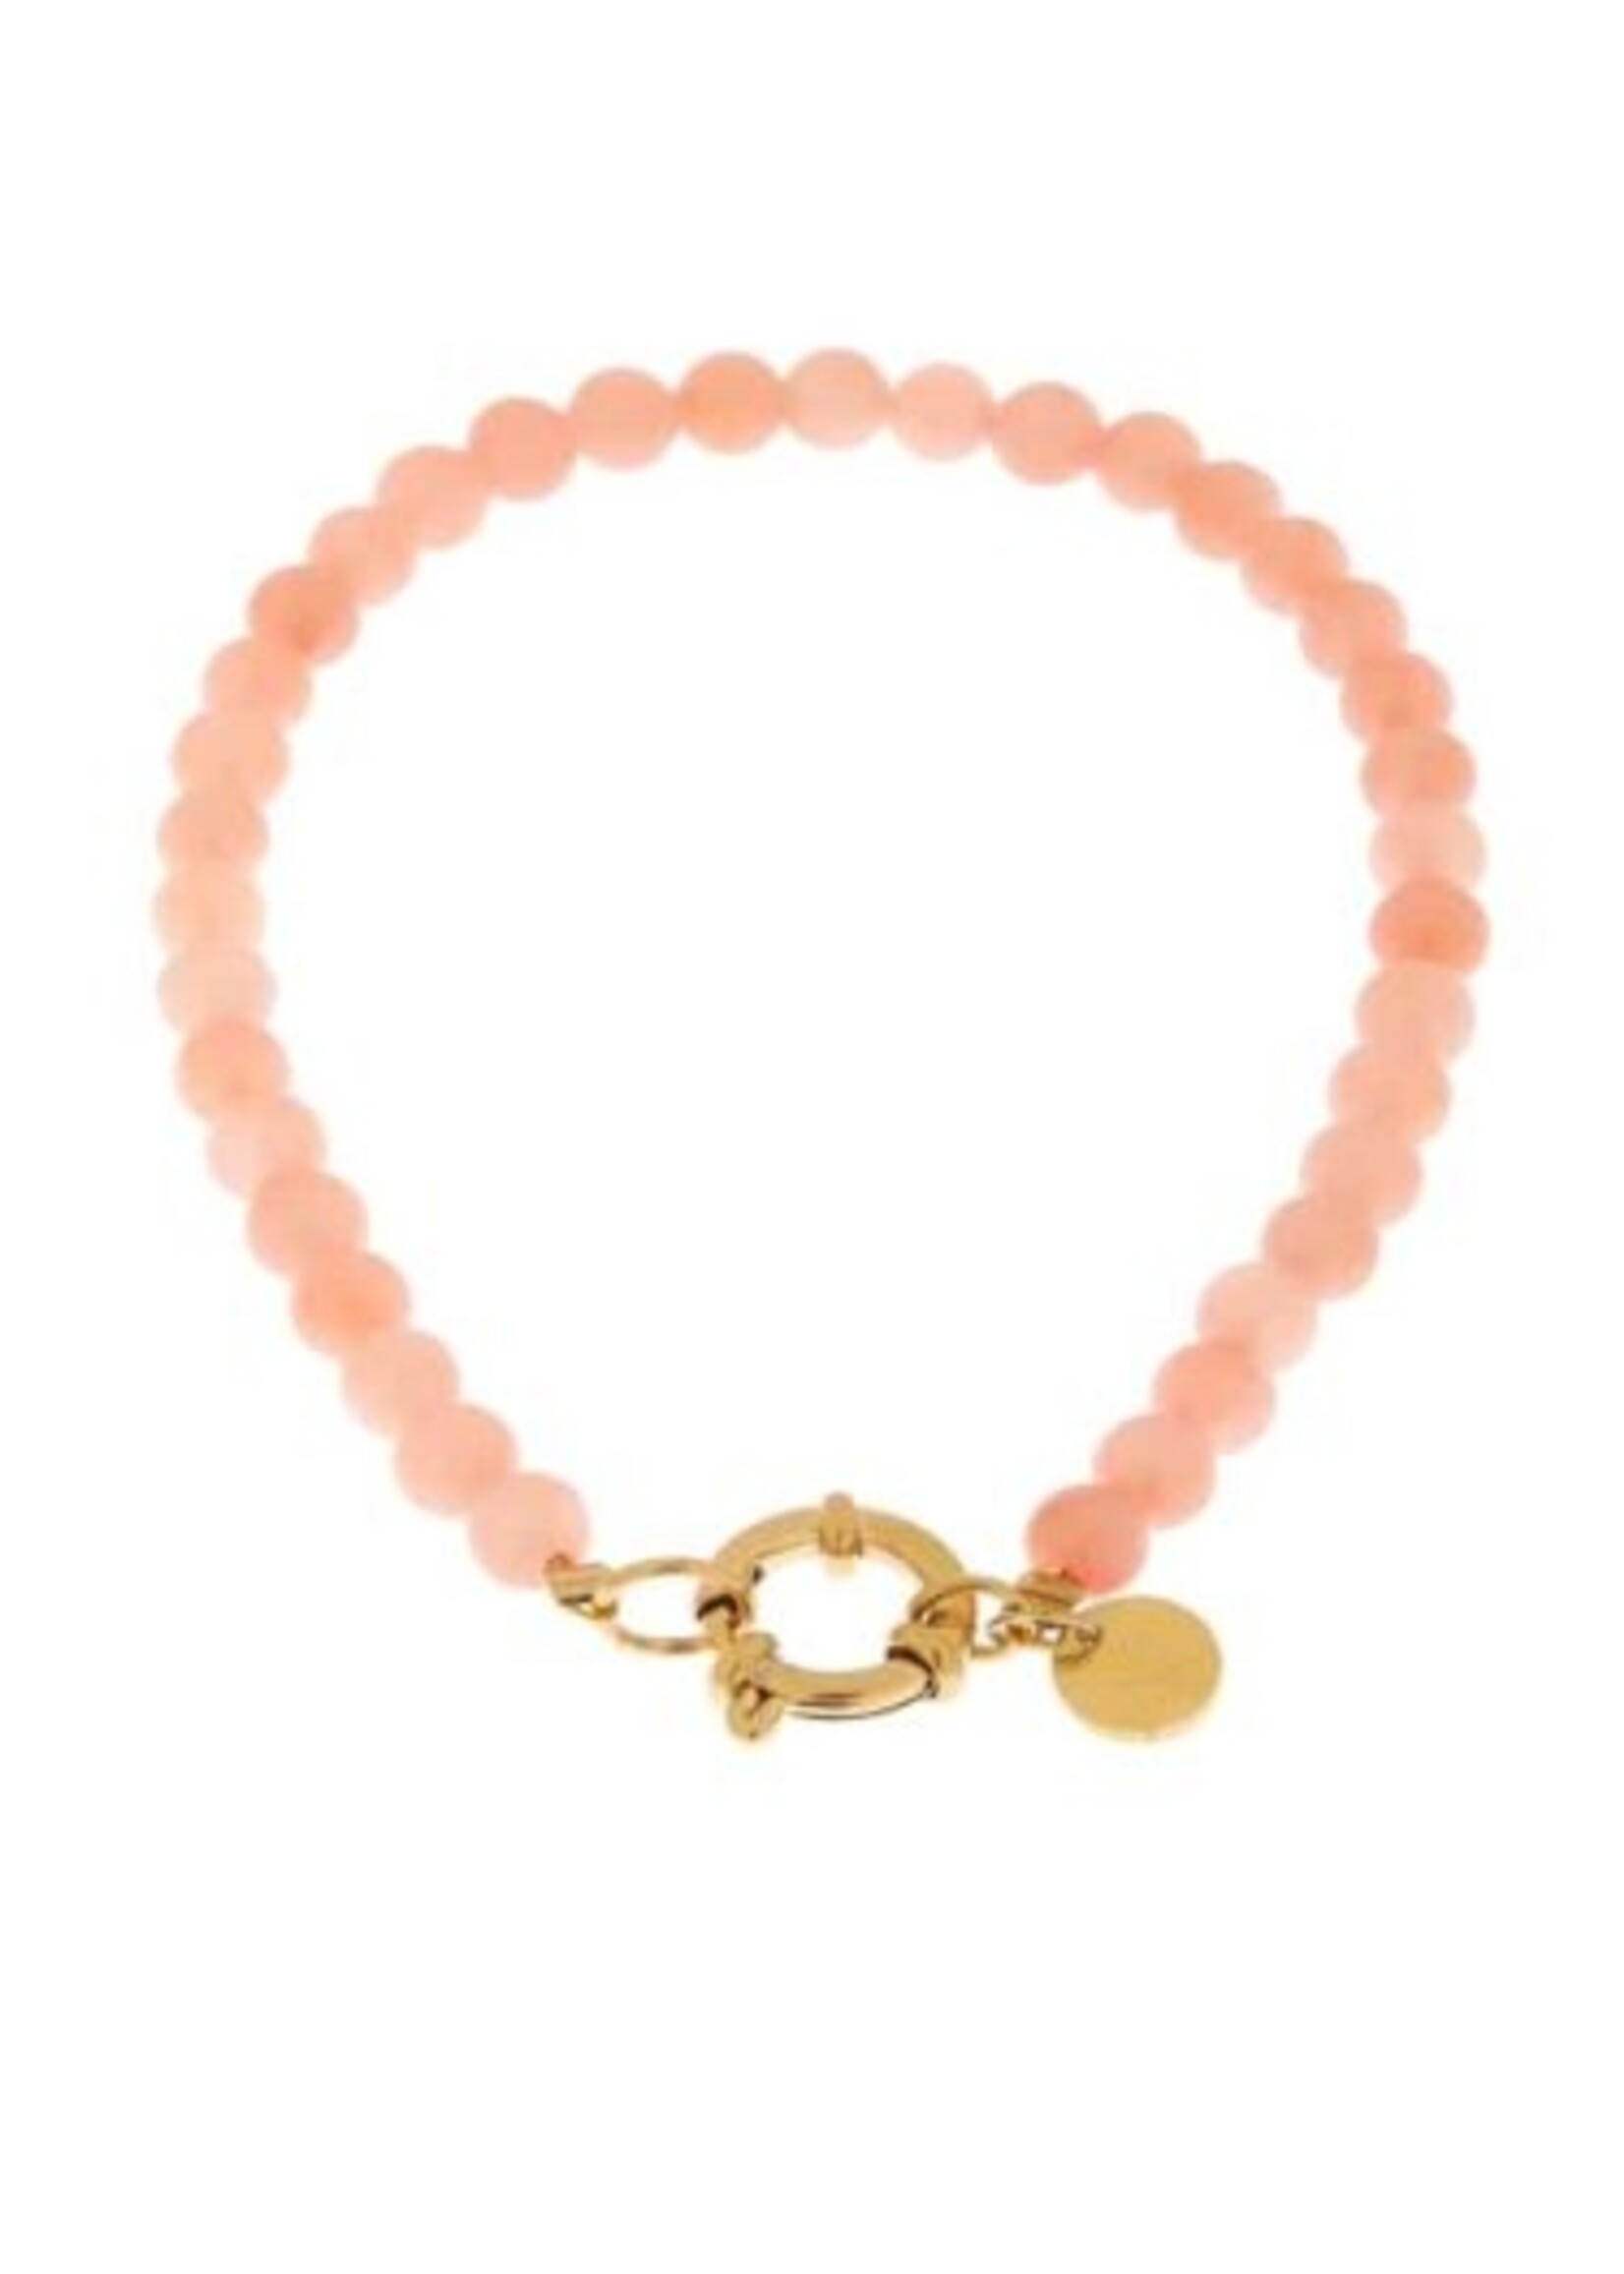 Label kiki Armband pink beads bracelet gold